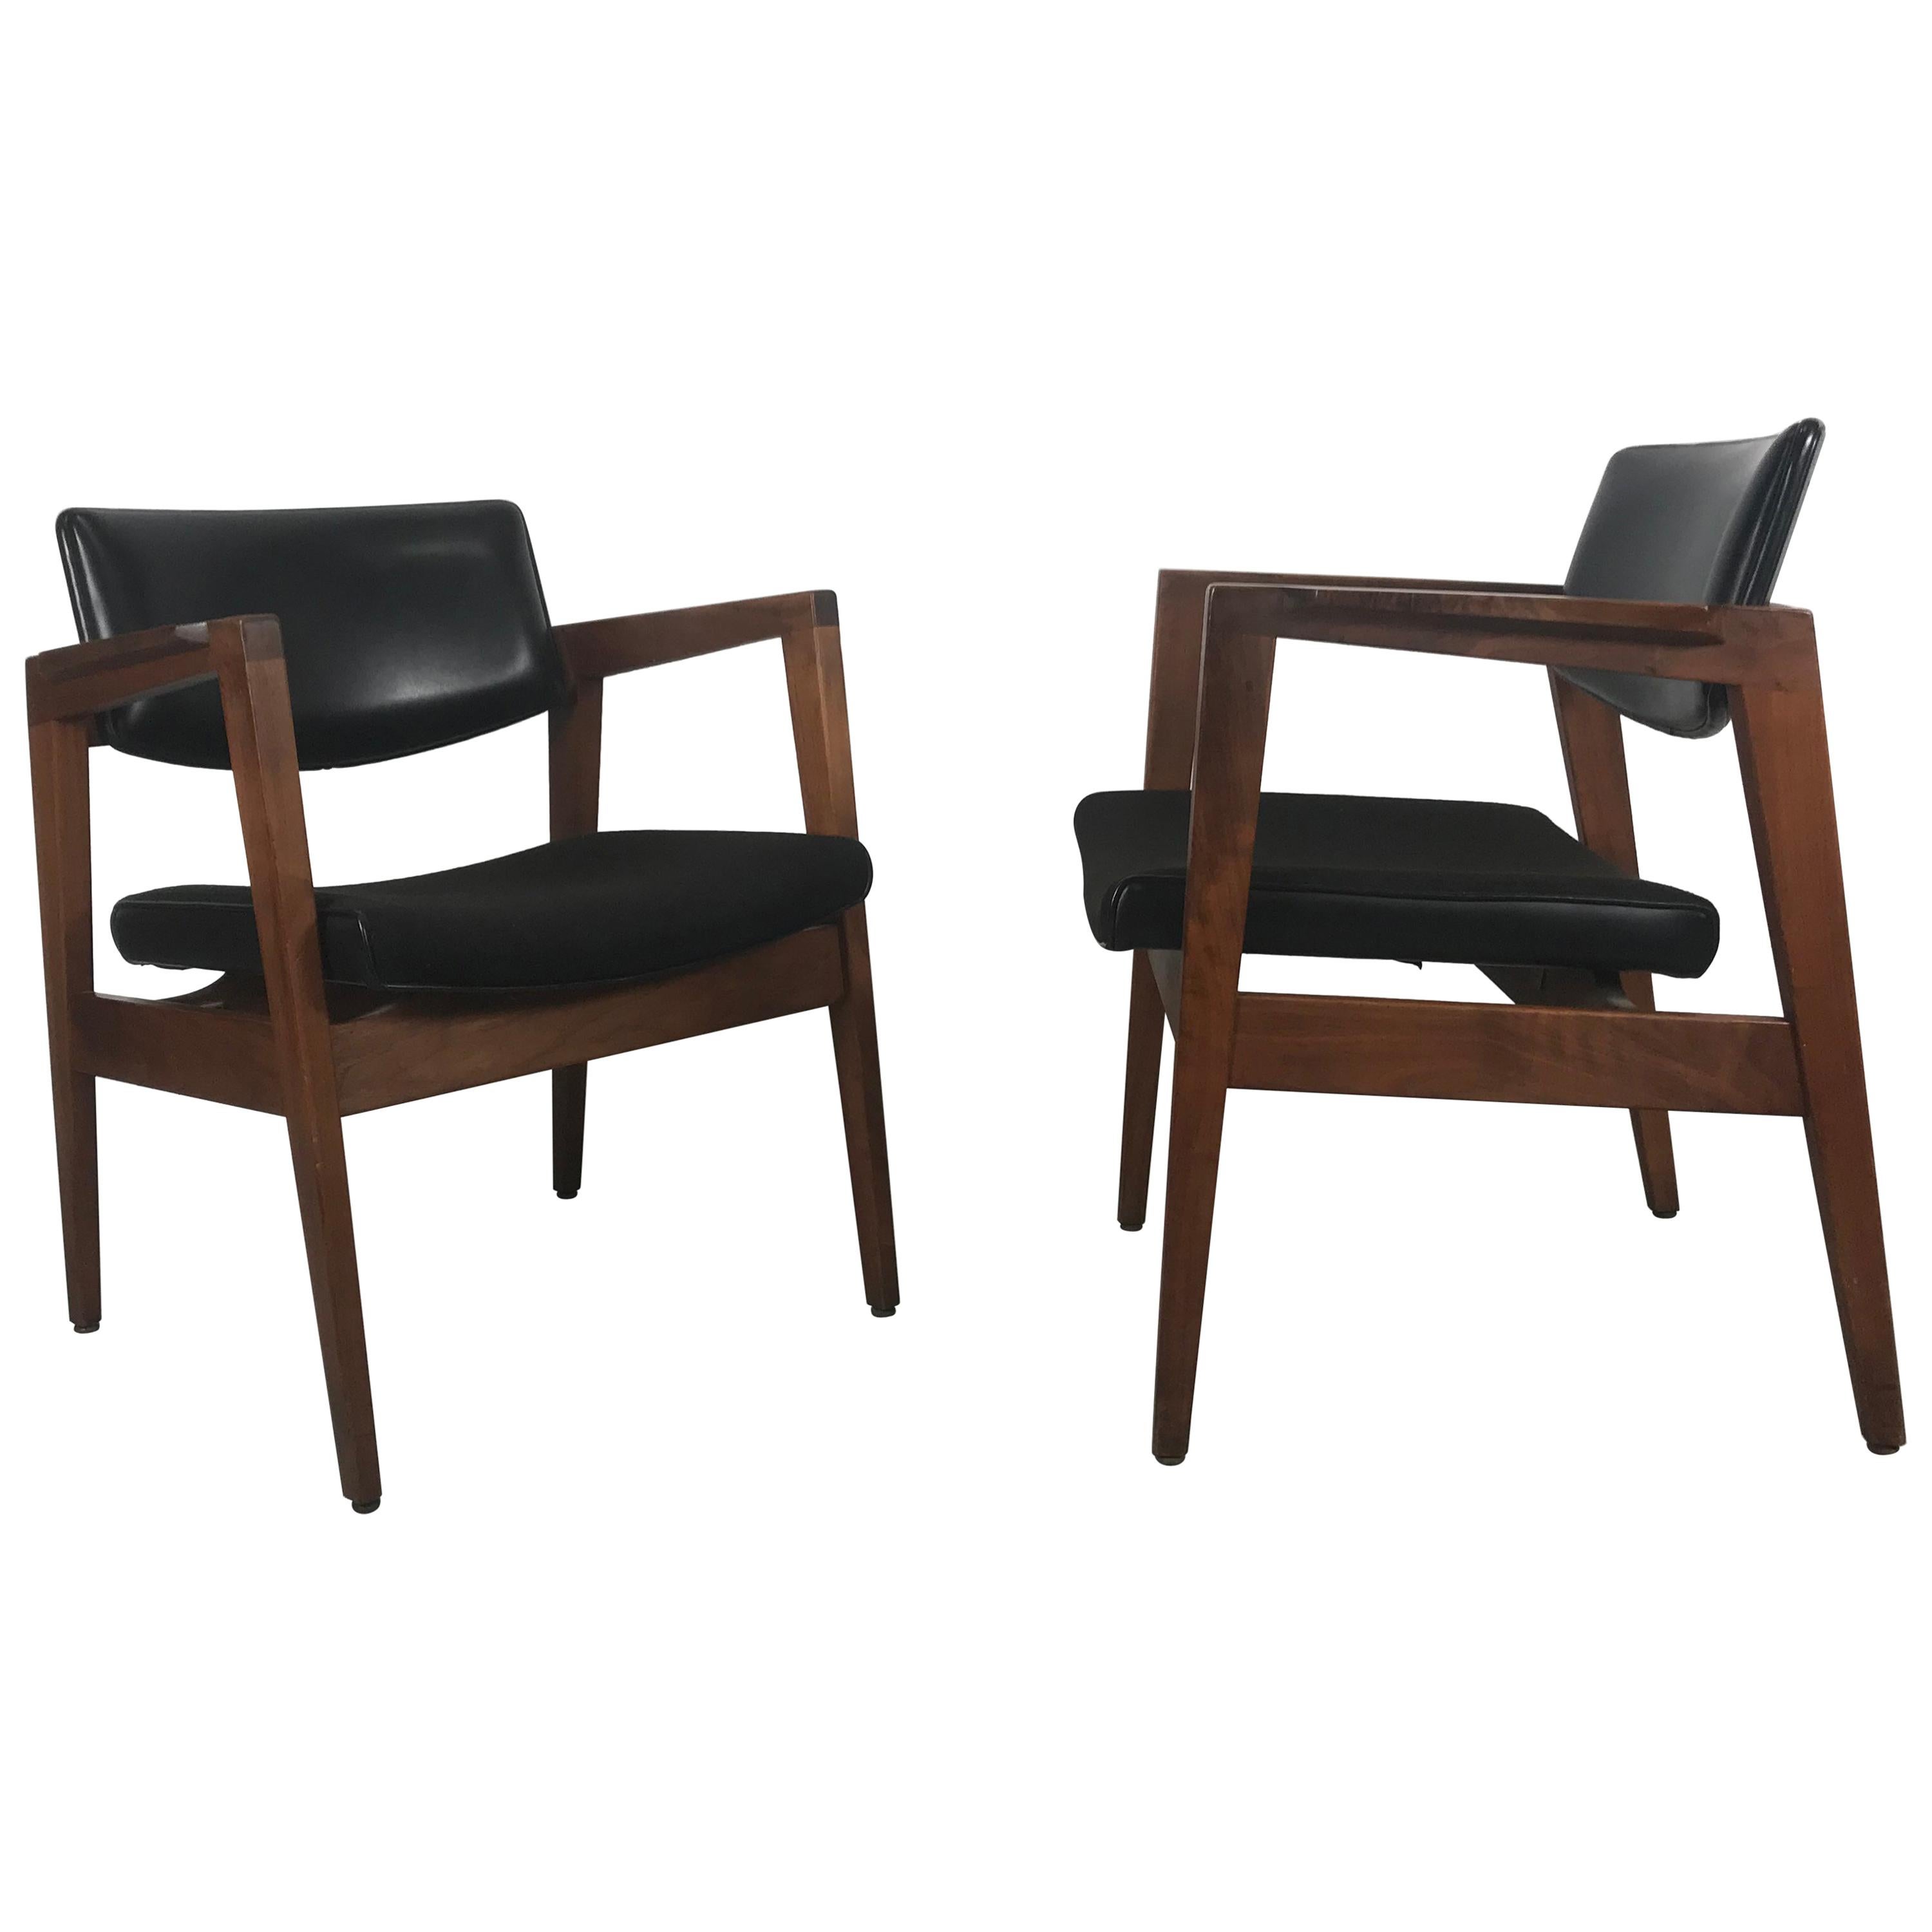 Classic Mid-Century Modern Lounge Chairs, Walnut Frames, by Gunlocke, Jens Risom